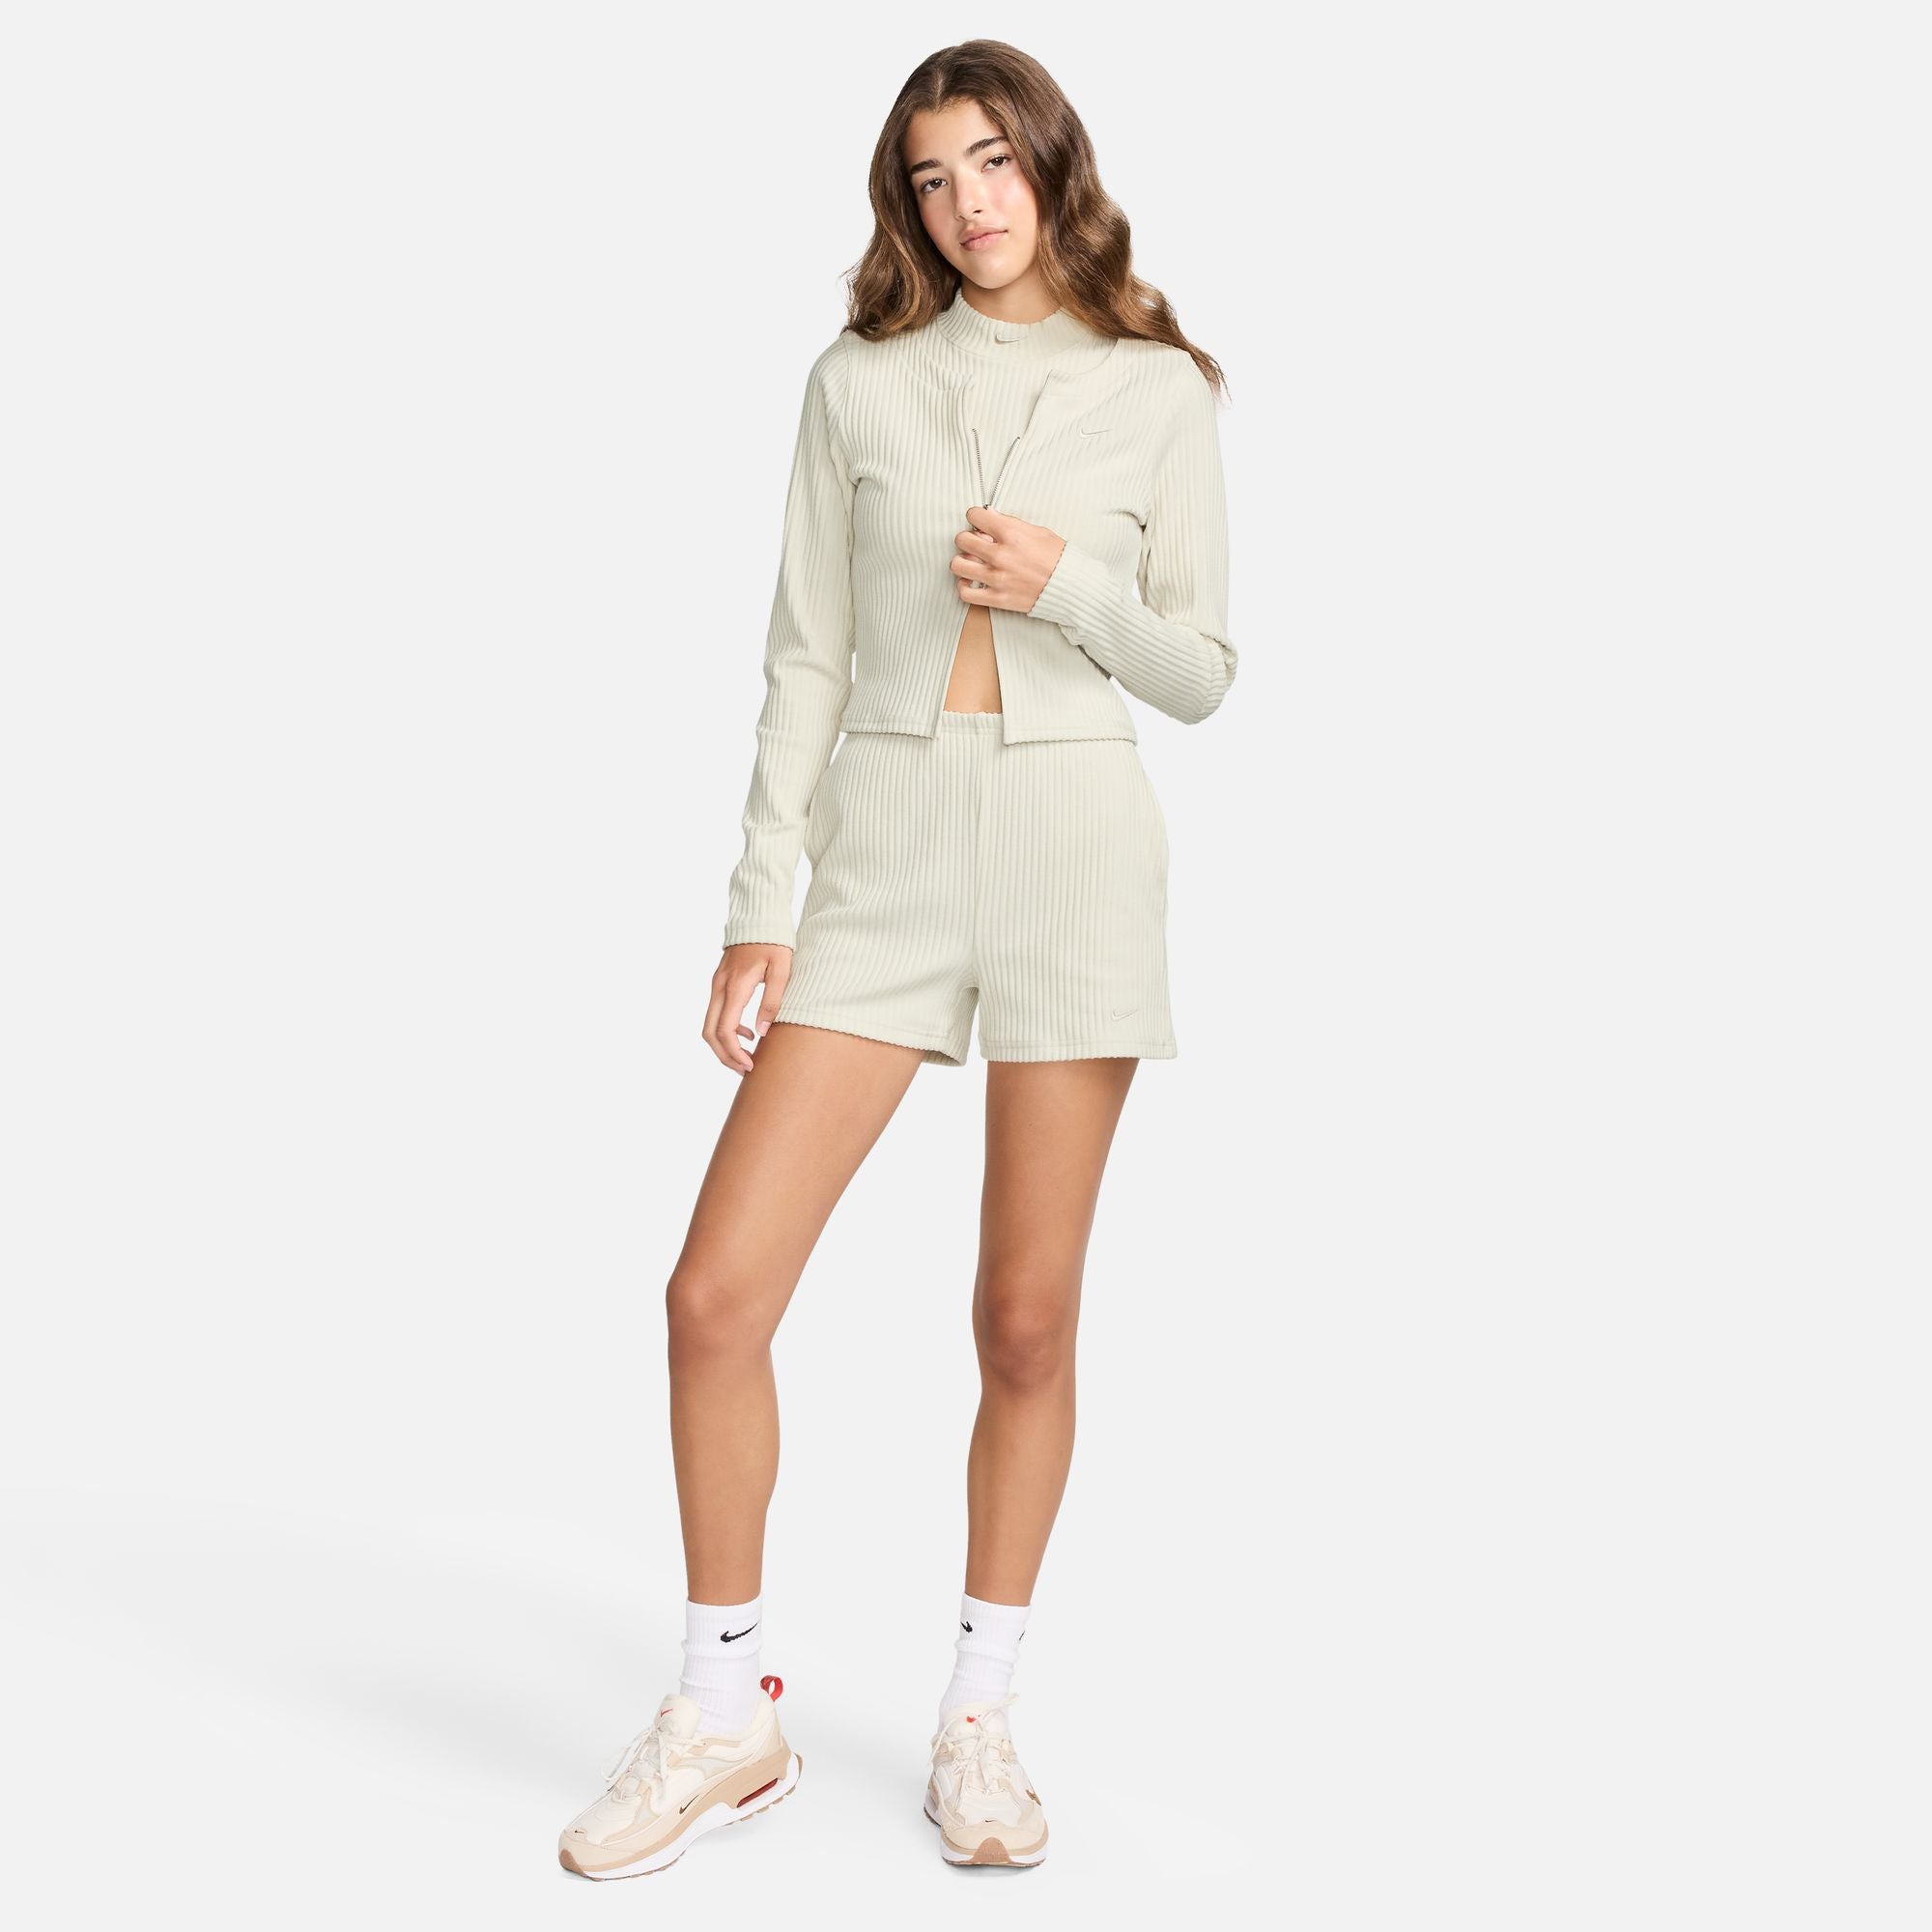 Nike Sportswear Chill Knit Women's Slim Full-Zip Ribbed Cardigan